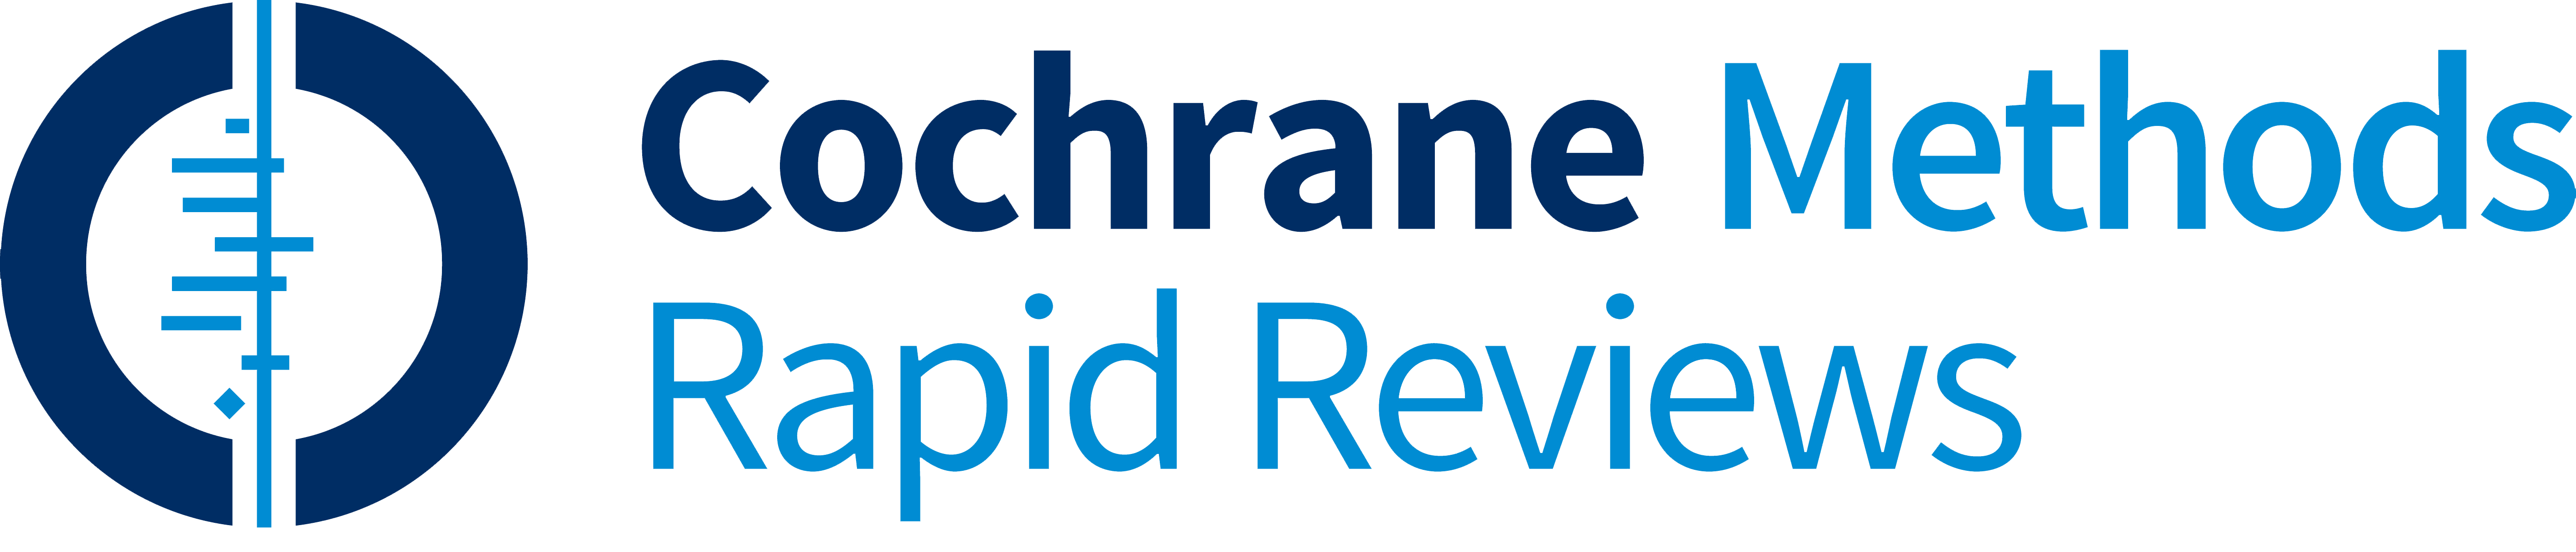 Cochrane Methods Rapid Reviews